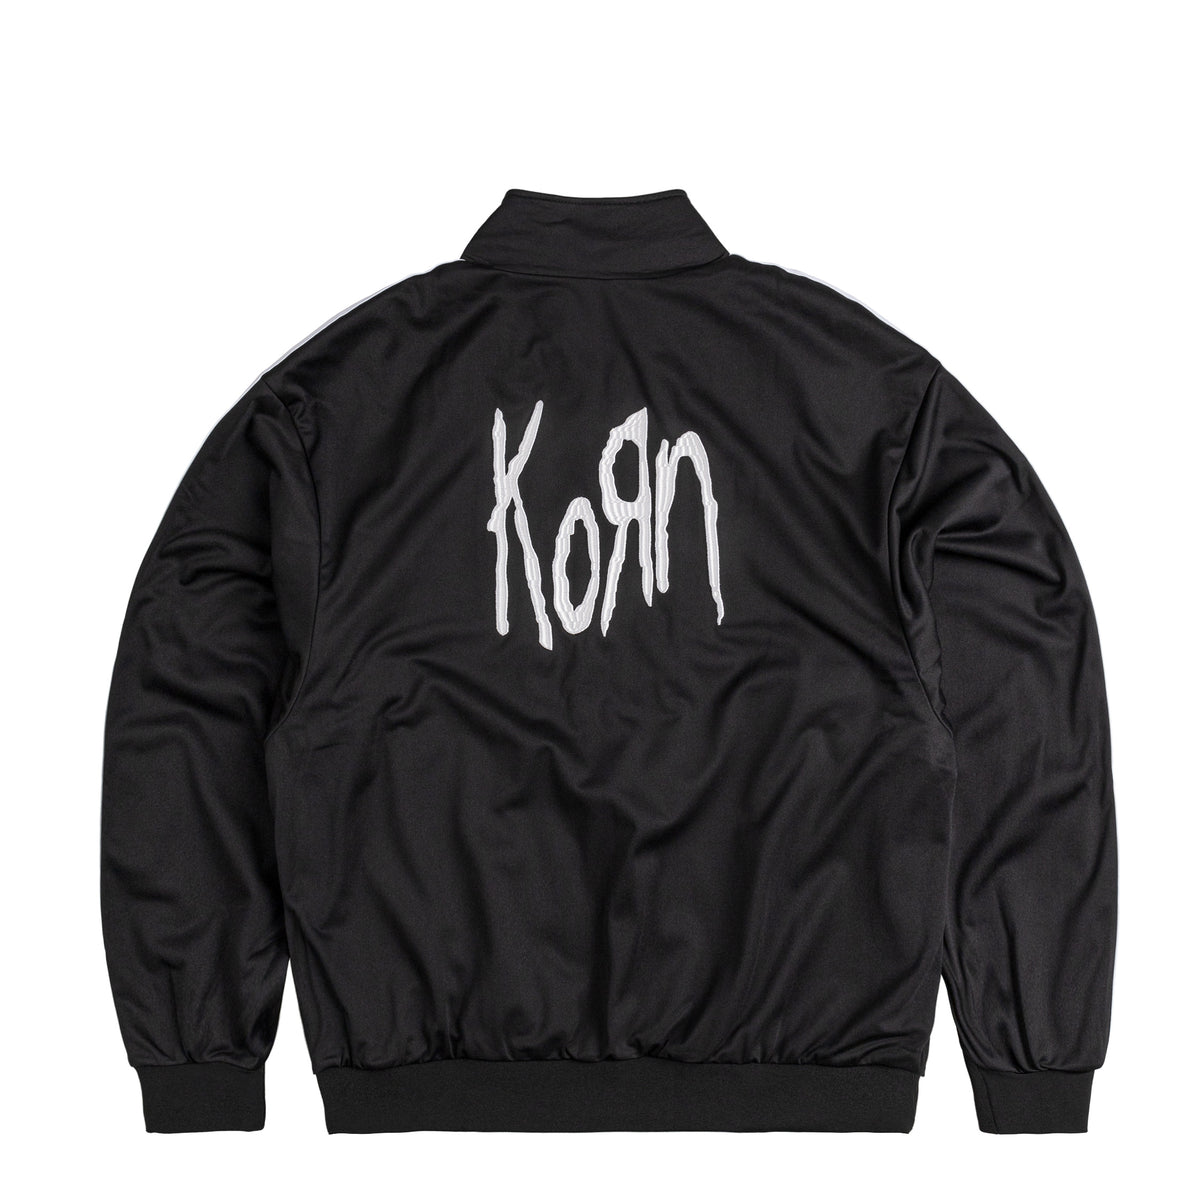 adidas x Korn Truck Top Black-